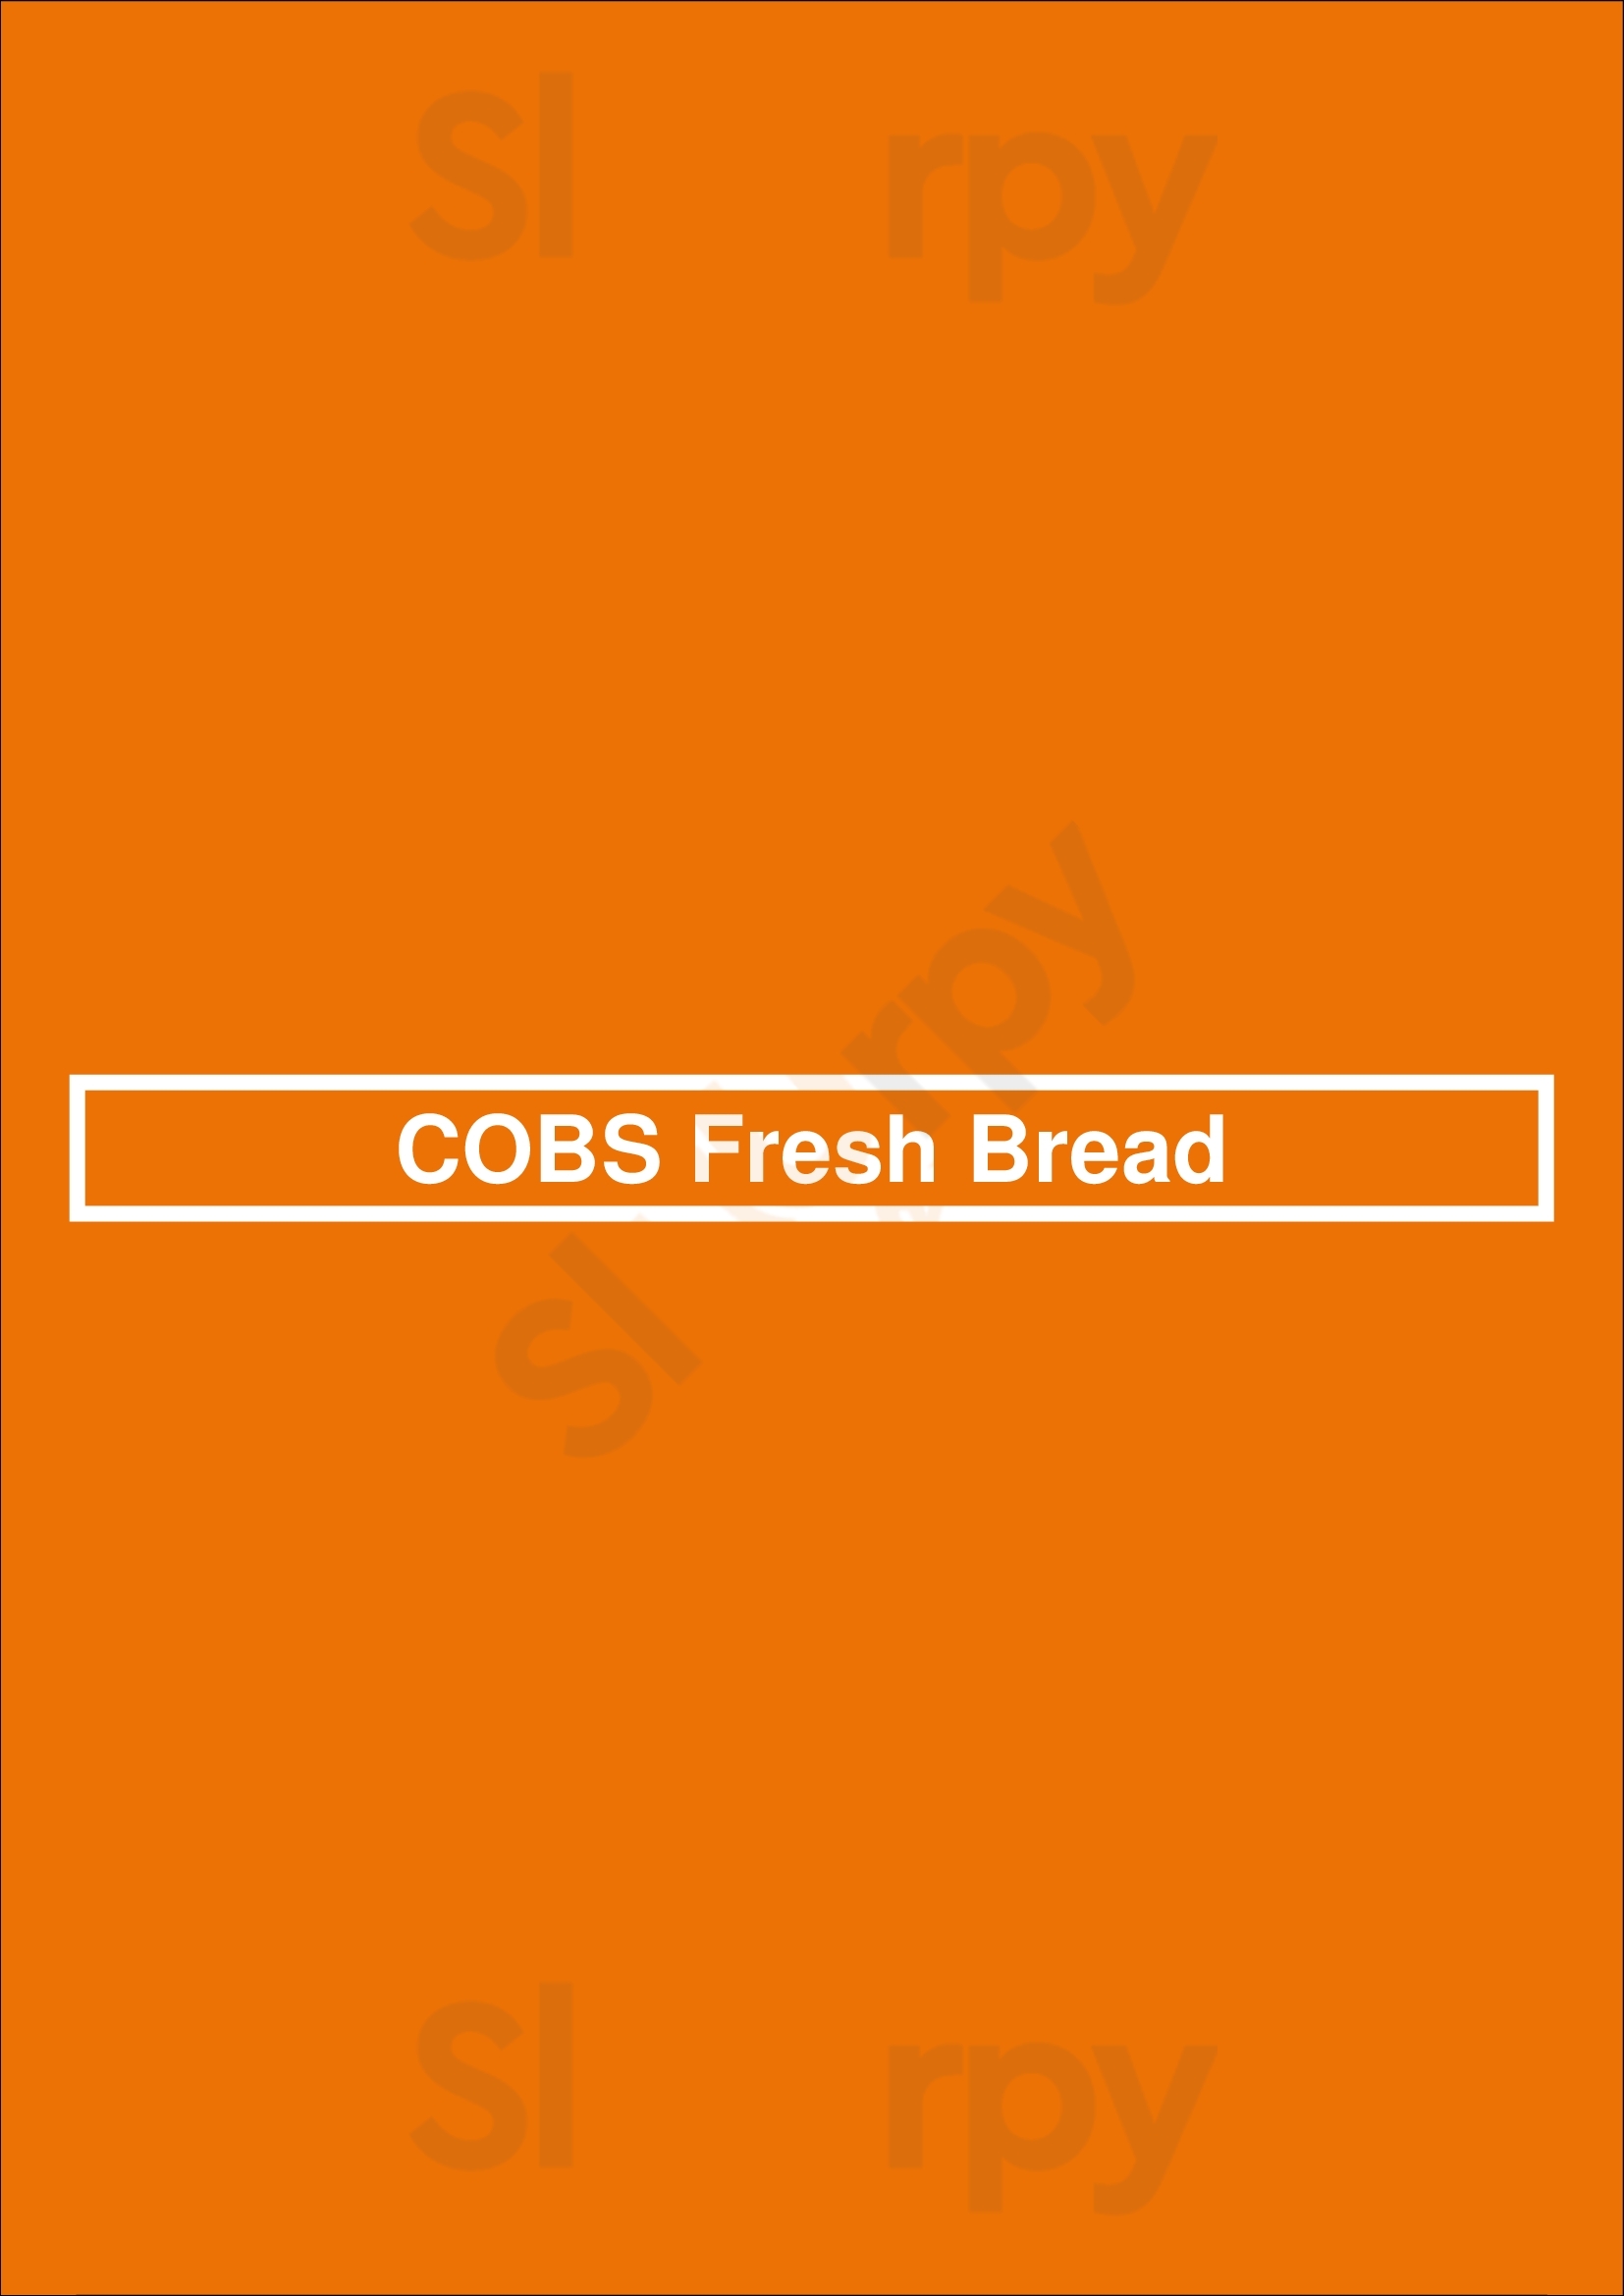 Cobs Fresh Bread Vancouver Menu - 1